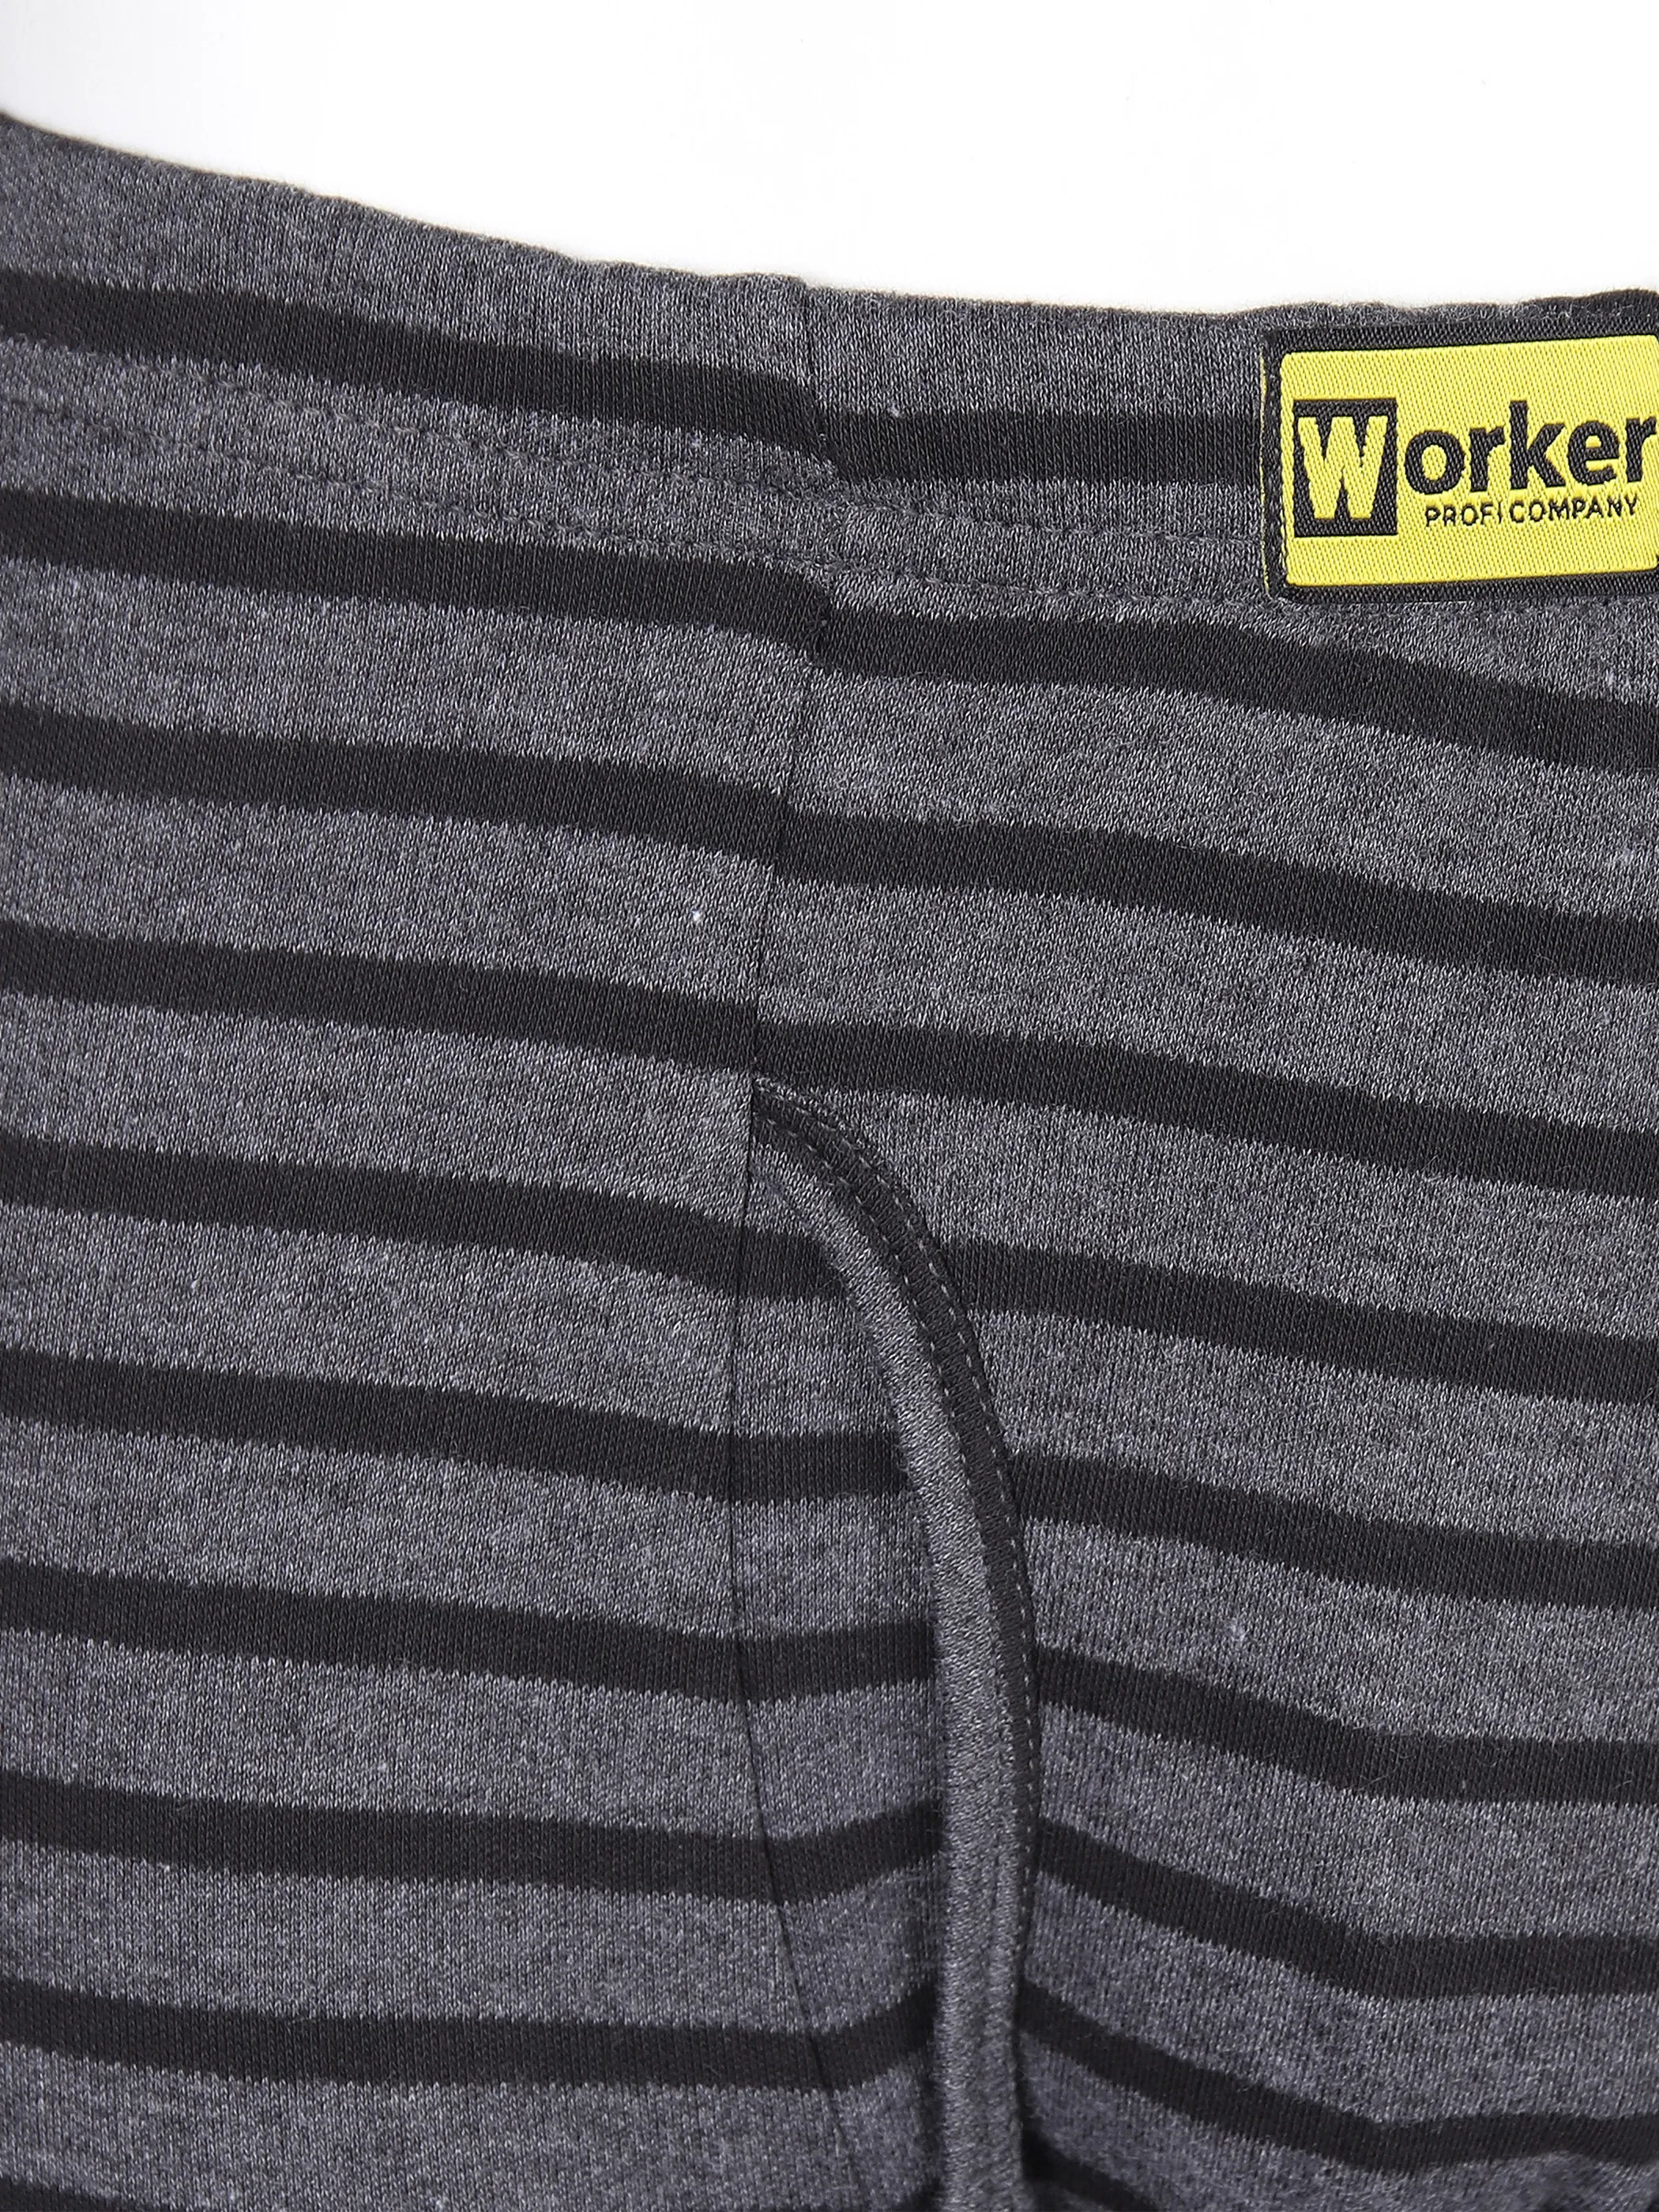 Worker He-Unterhose lang mit Eingriff Grau 683628 ANTHRA/GER 3